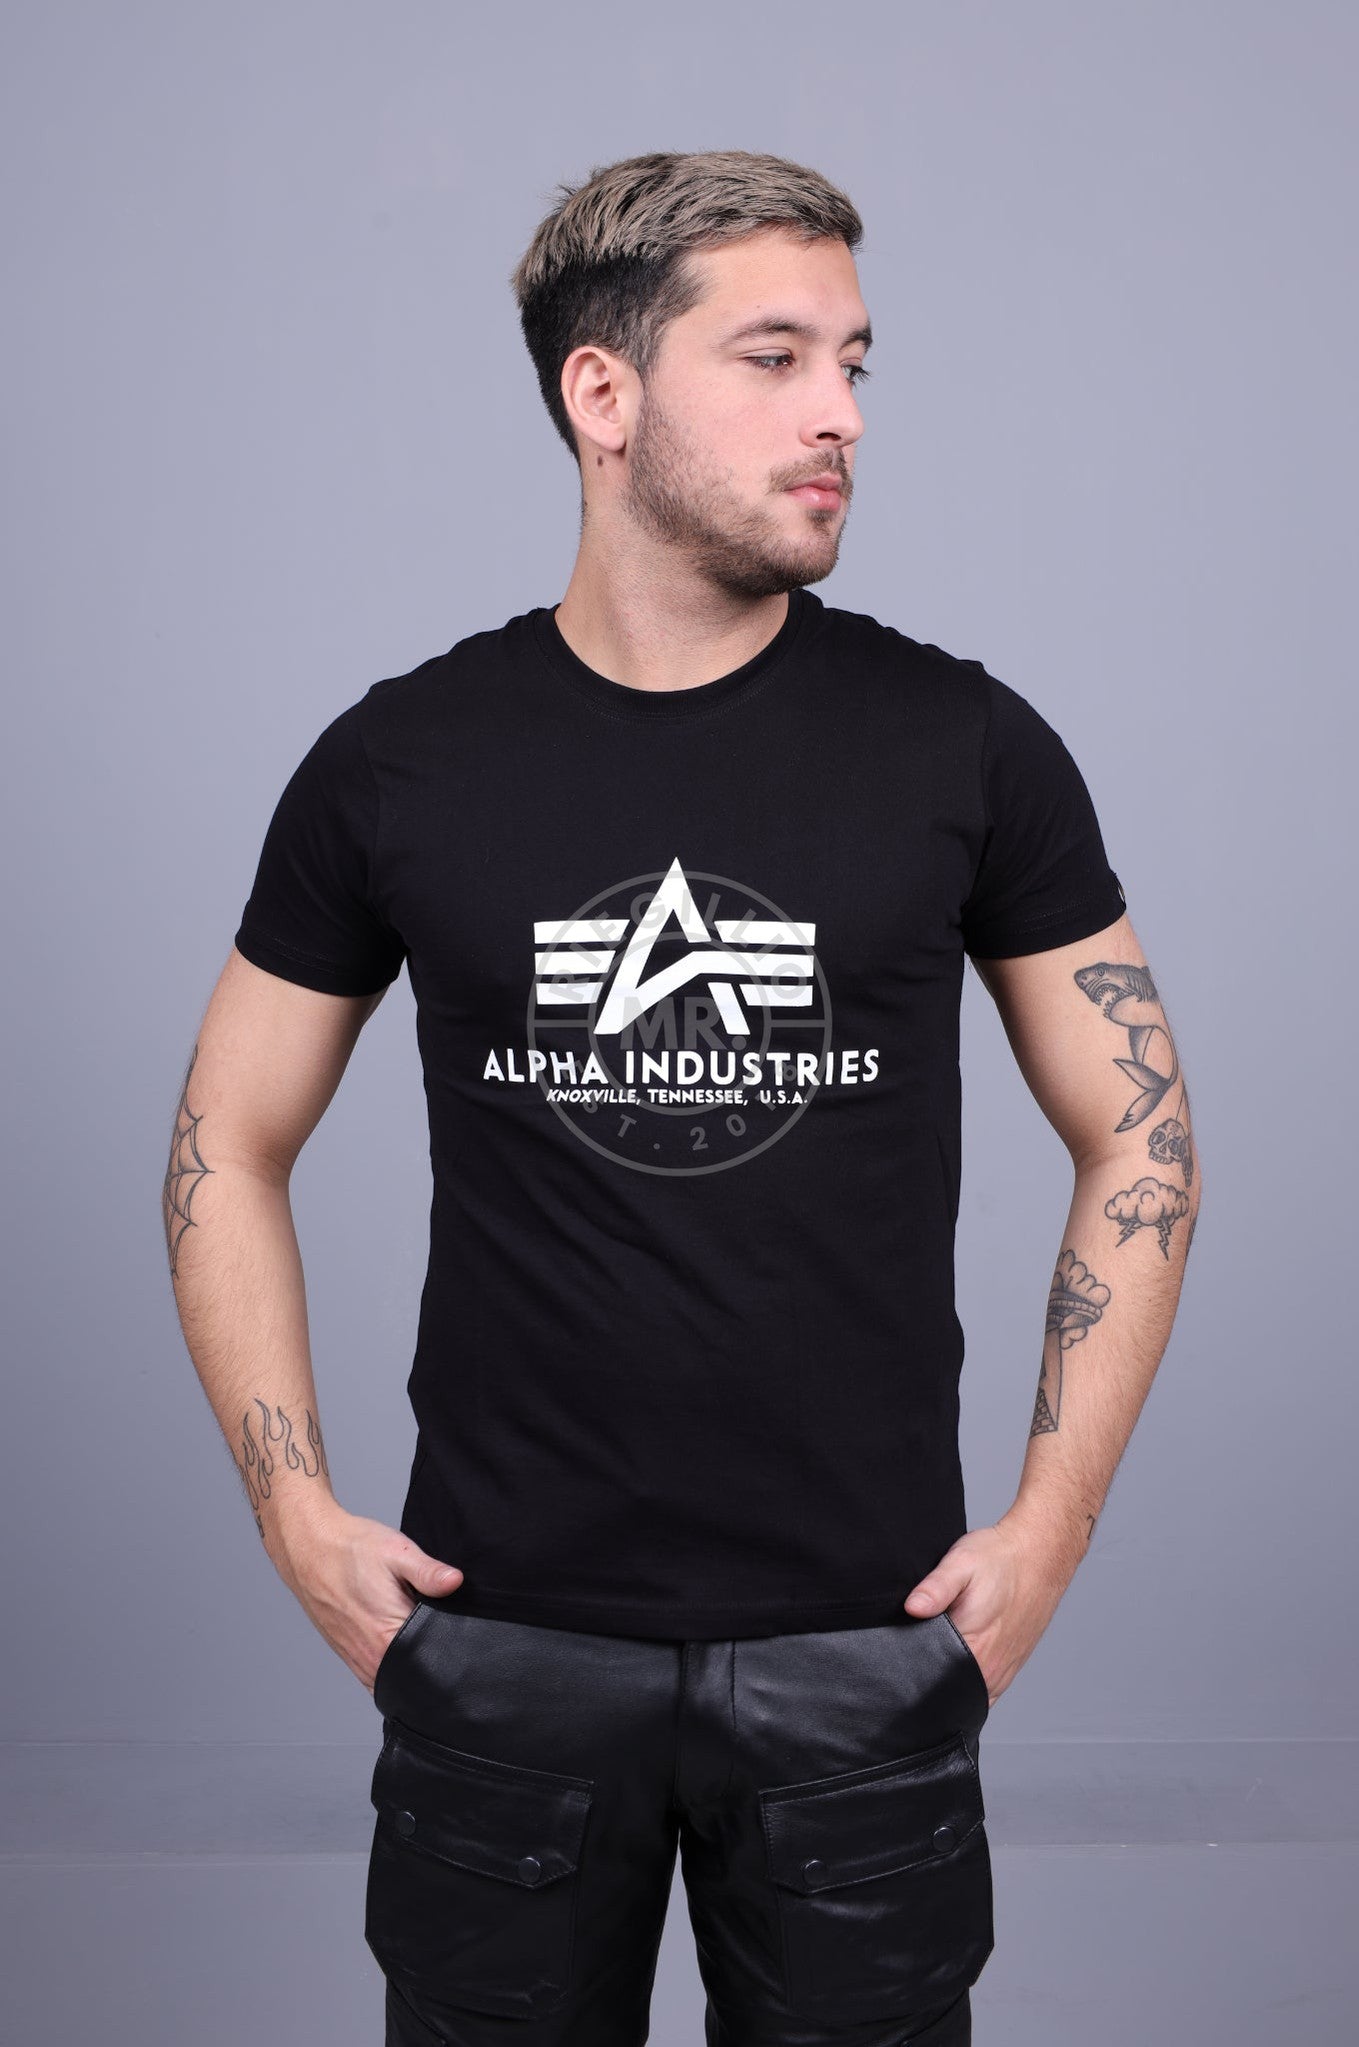 Alpha Industries Basic T-Shirt Black-at MR. Riegillio